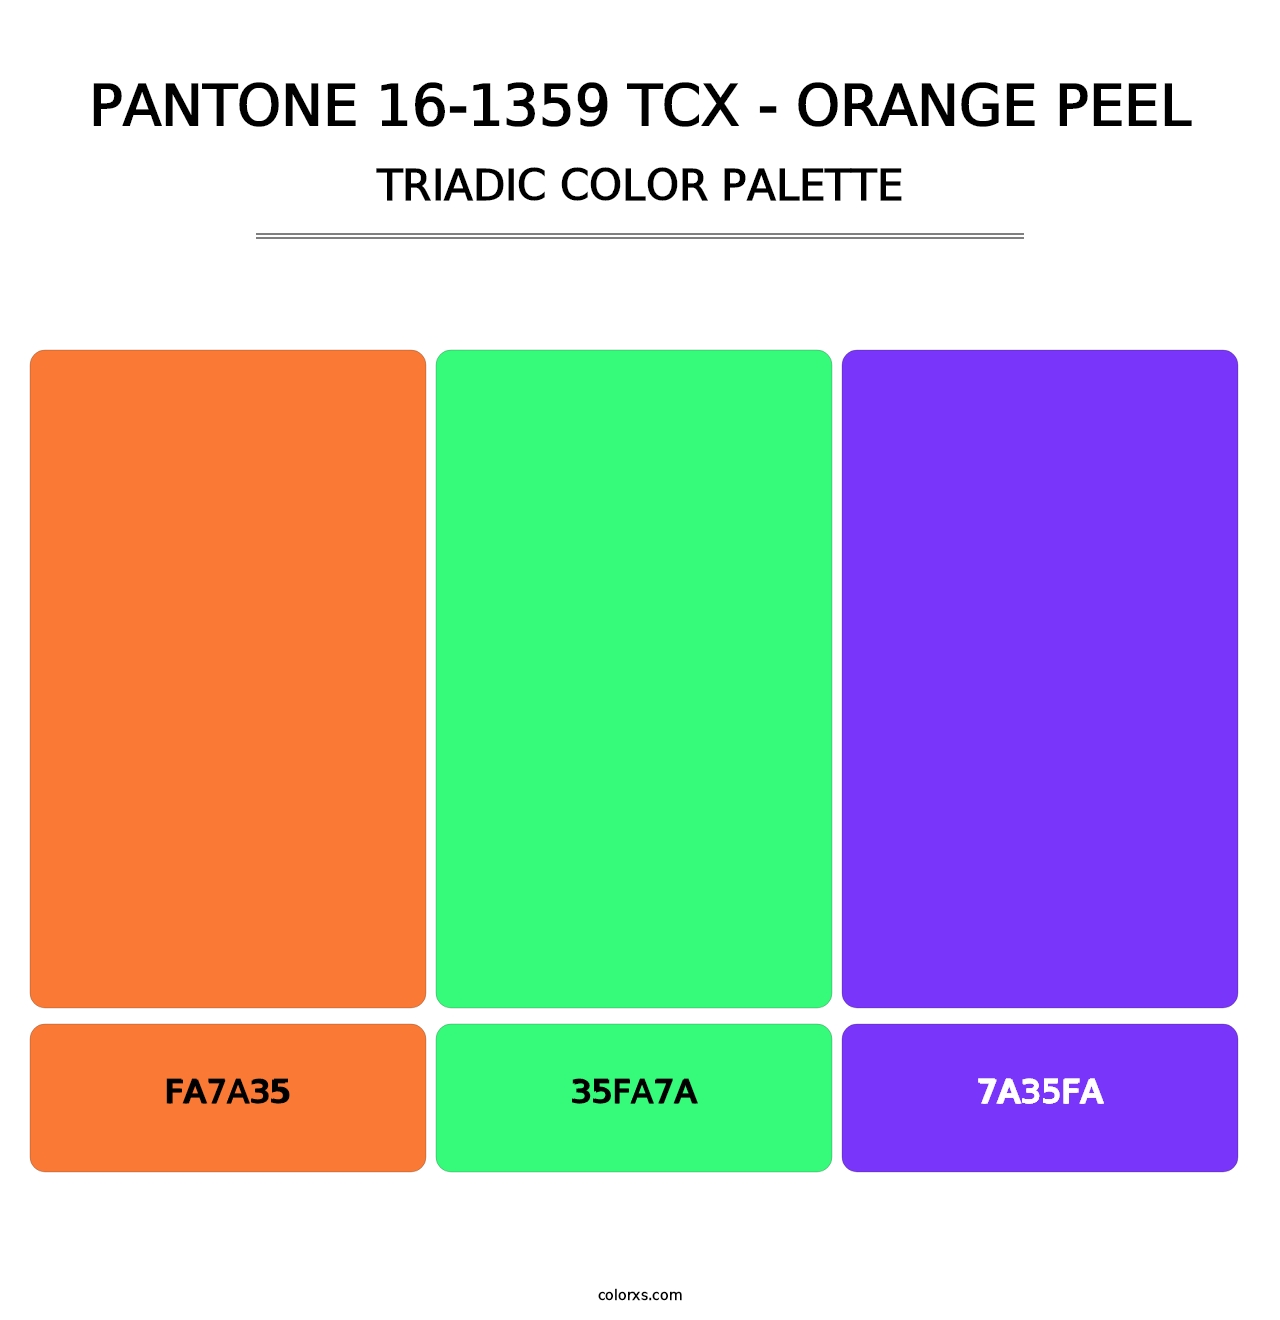 PANTONE 16-1359 TCX - Orange Peel - Triadic Color Palette